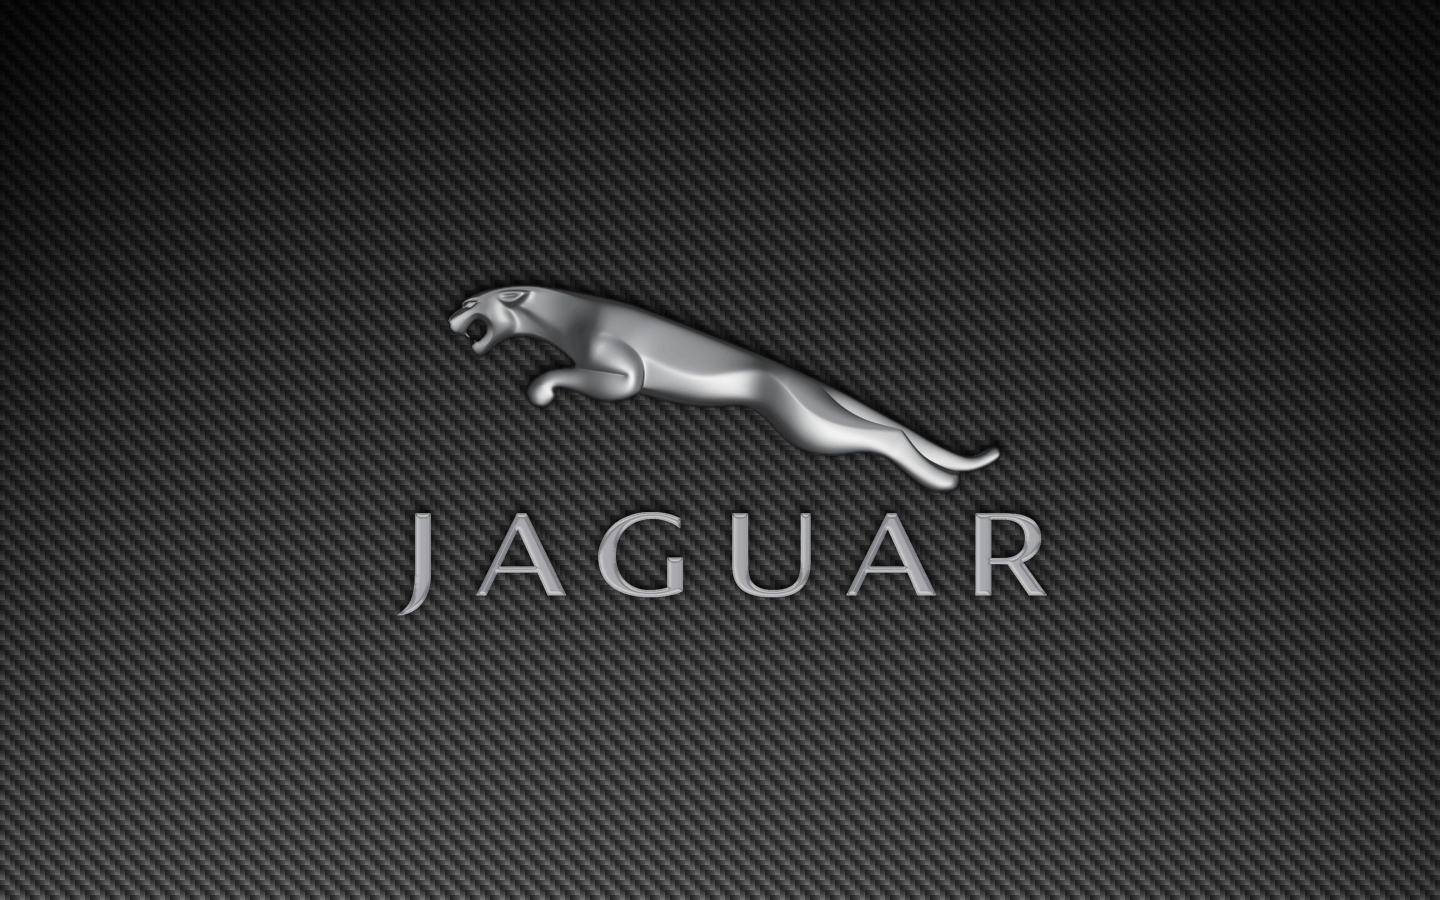 Grey Lion Car Logo - Jaguar Logo, Jaguar Car Symbol Meaning and History | Car Brand Names.com